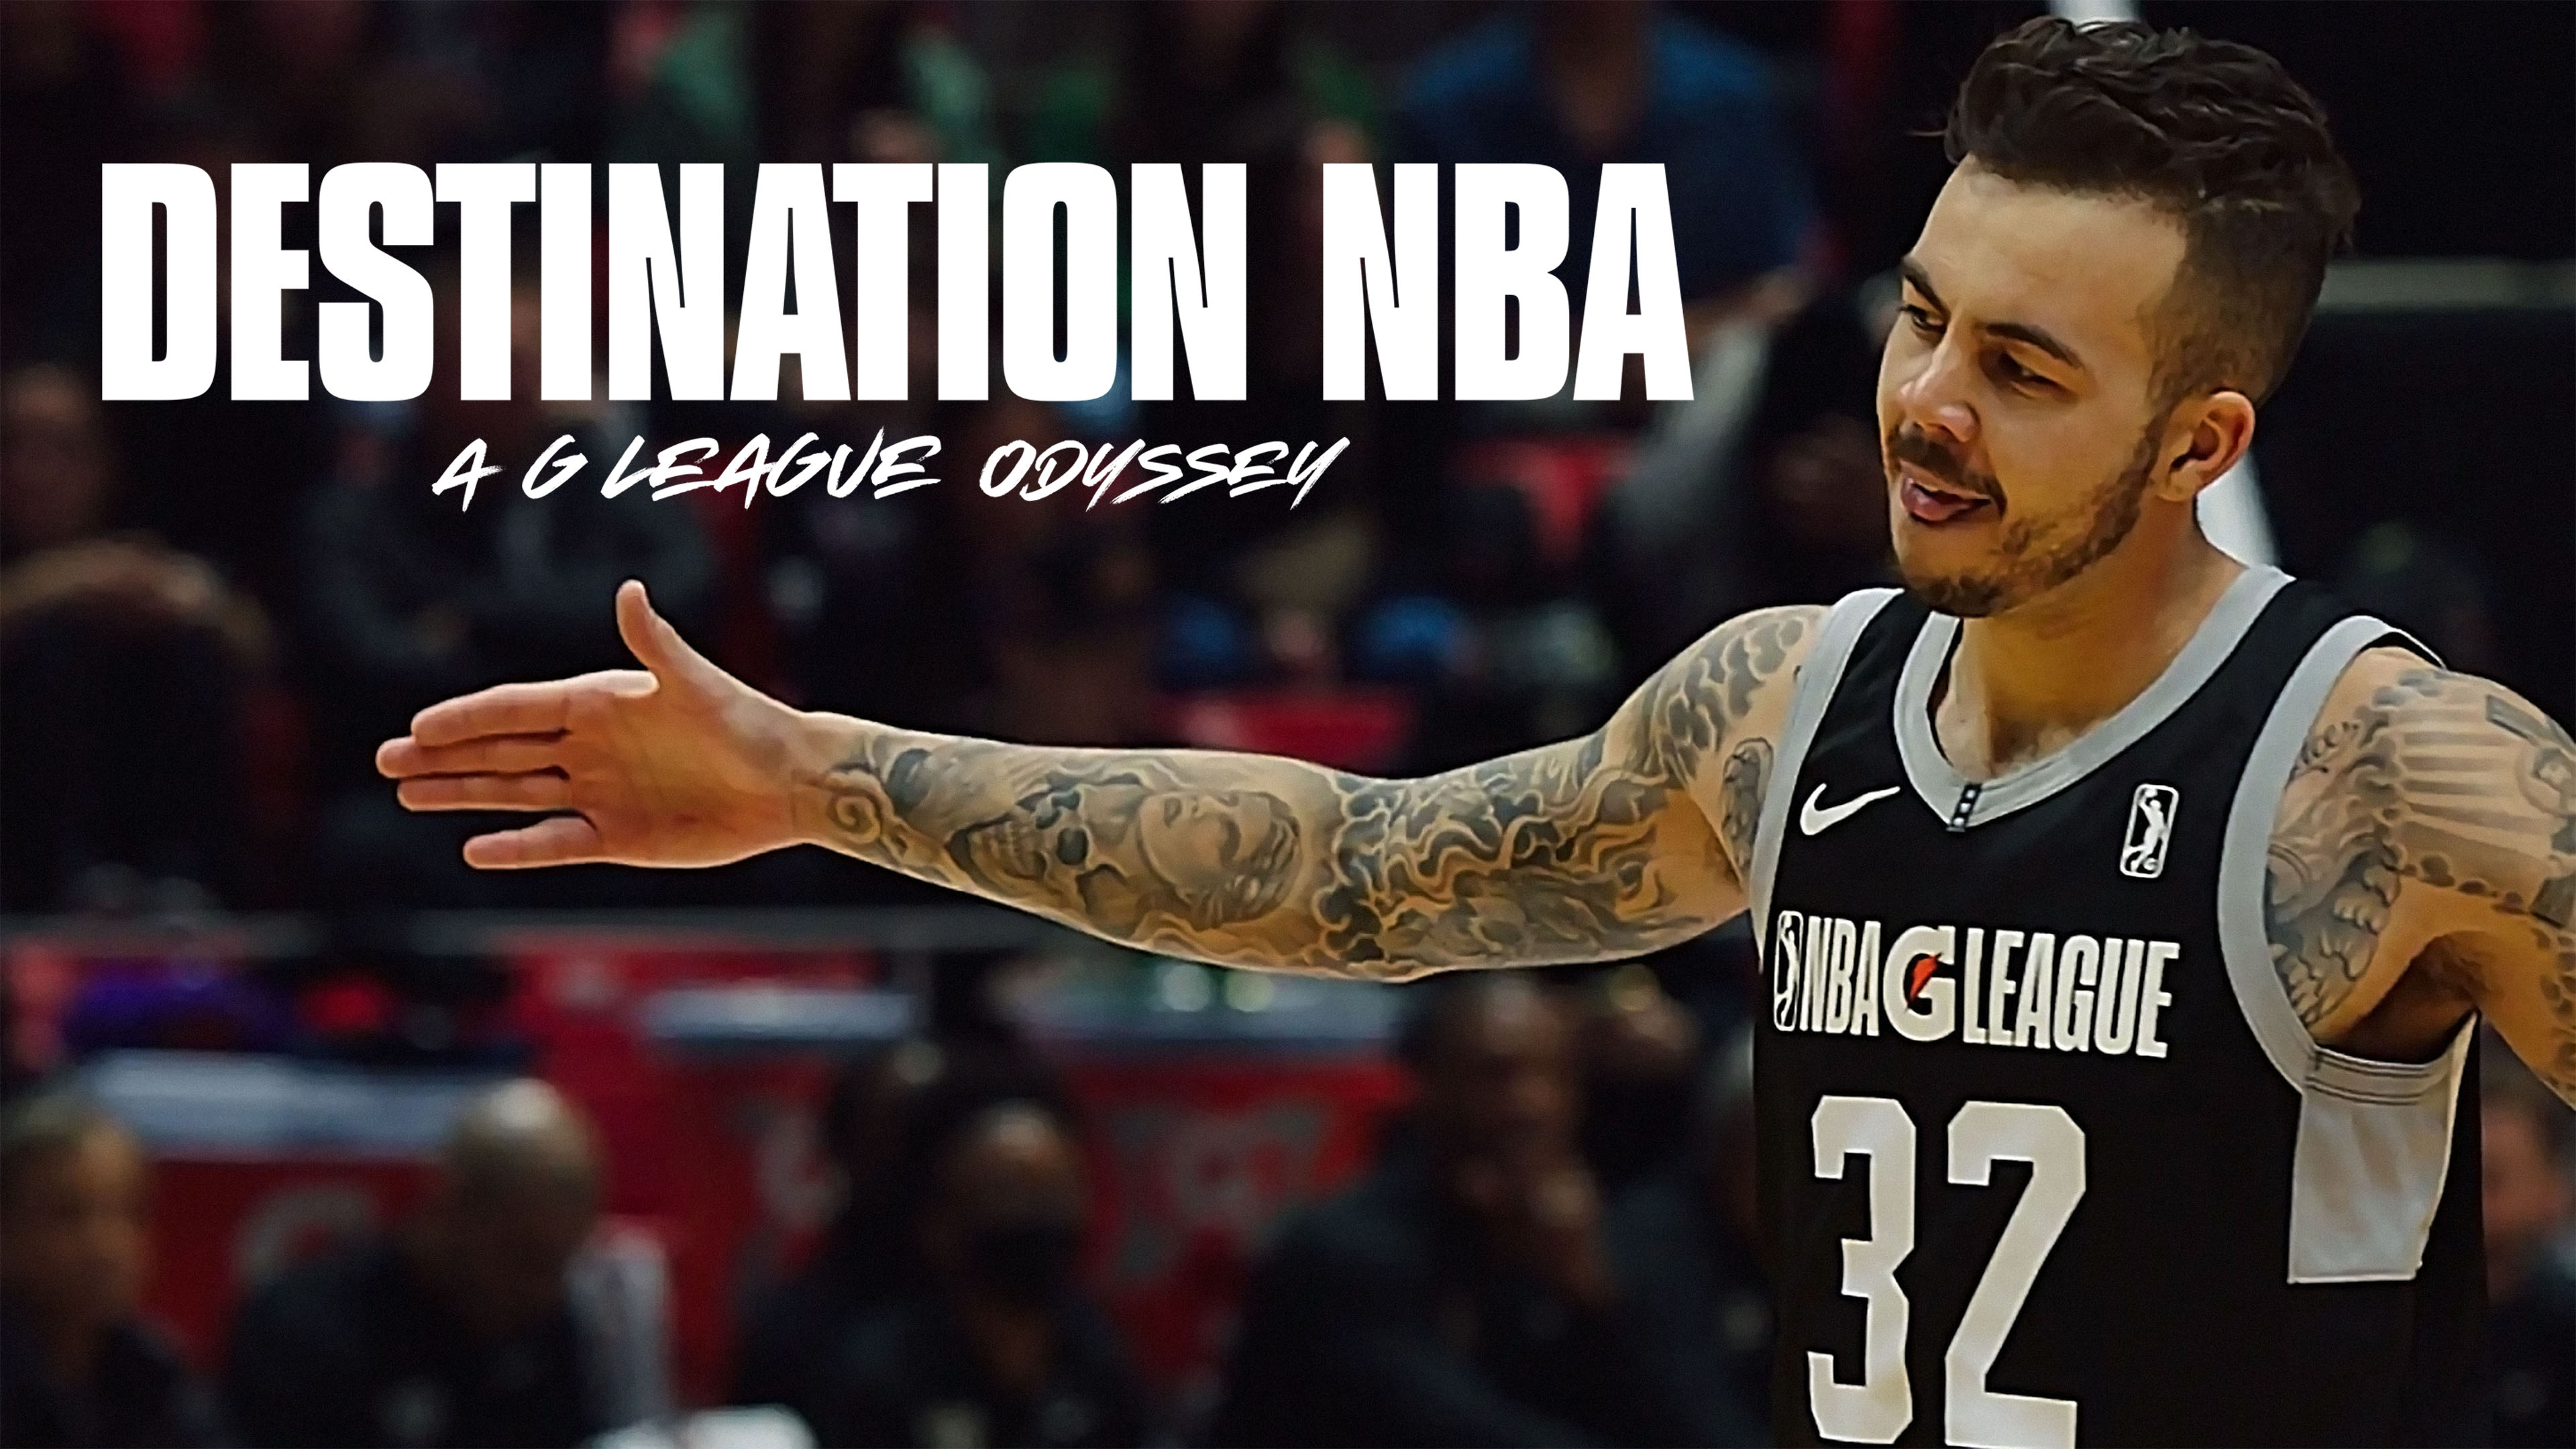 Destination NBA A G League Odyssey - Amazon Prime Video Documentary